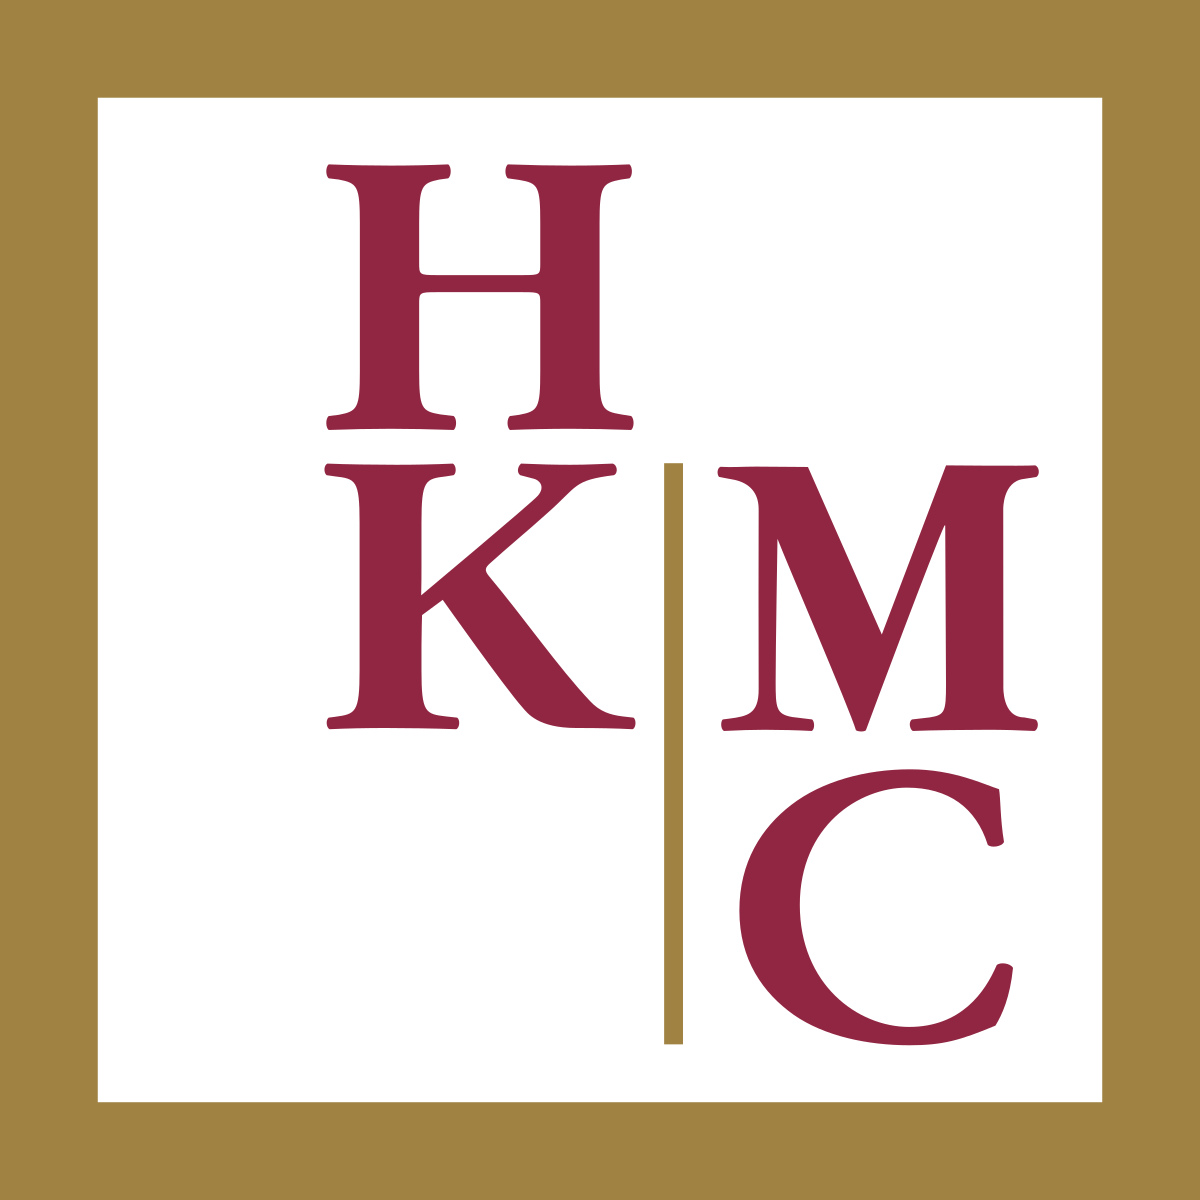 HKMC logo